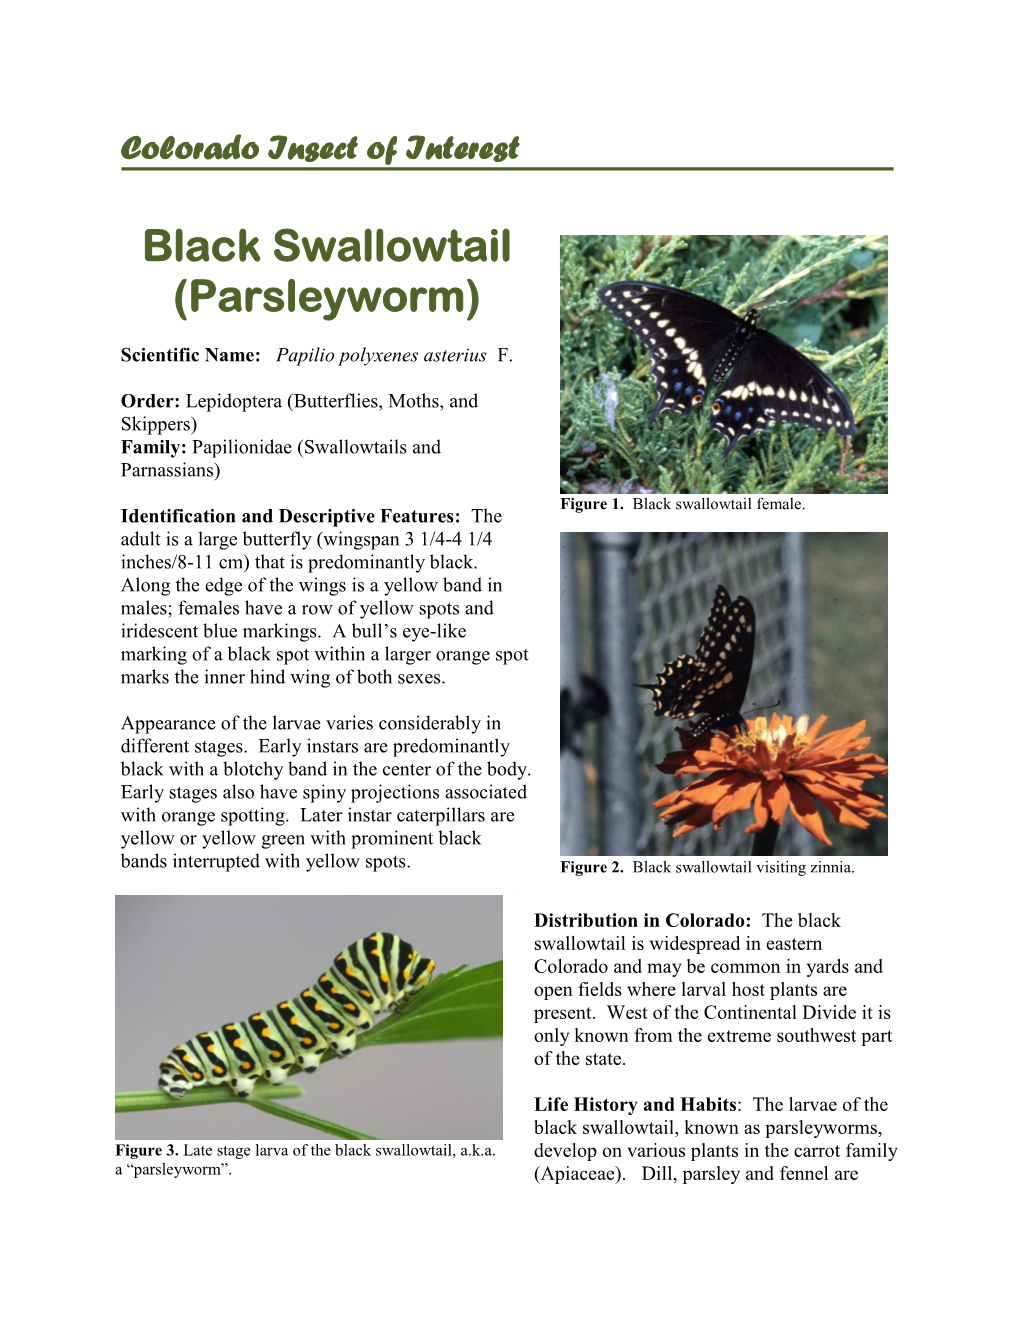 Black Swallowtail (Parsleyworm)